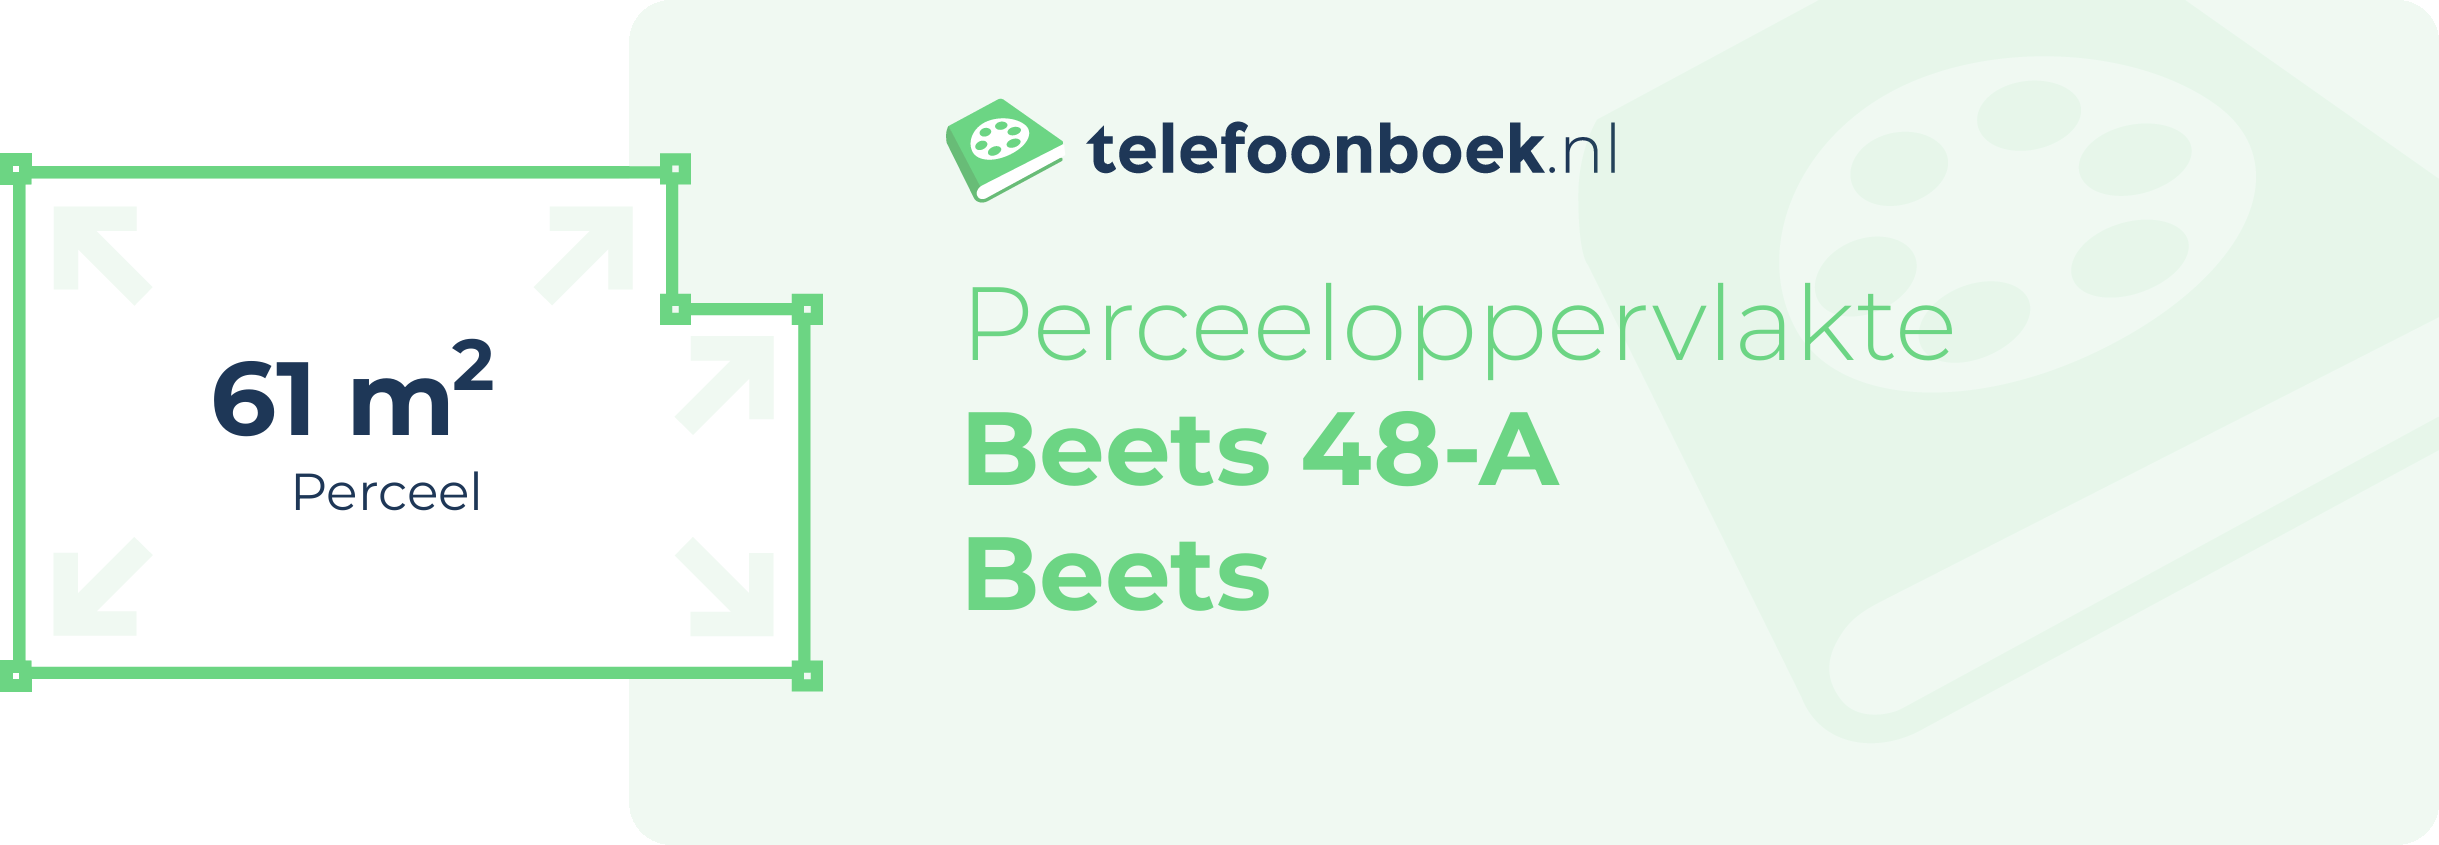 Perceeloppervlakte Beets 48-A Beets